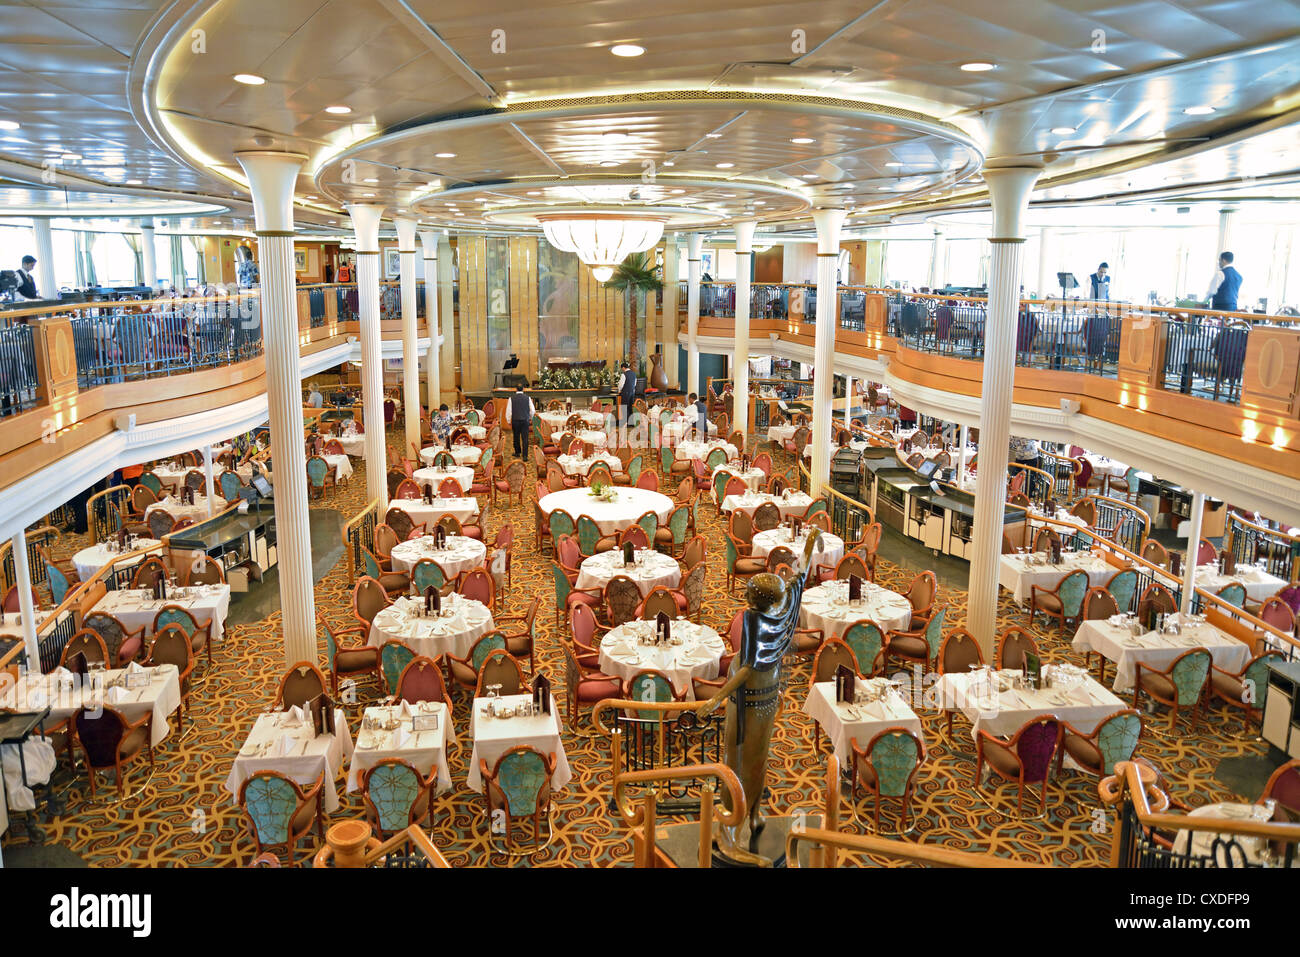 'The Great Gatsby' dining room on board Royal Caribbean 'Grandeur of the Seas' cruise ship, Adriatic Sea, Mediterranean, Europe Stock Photo